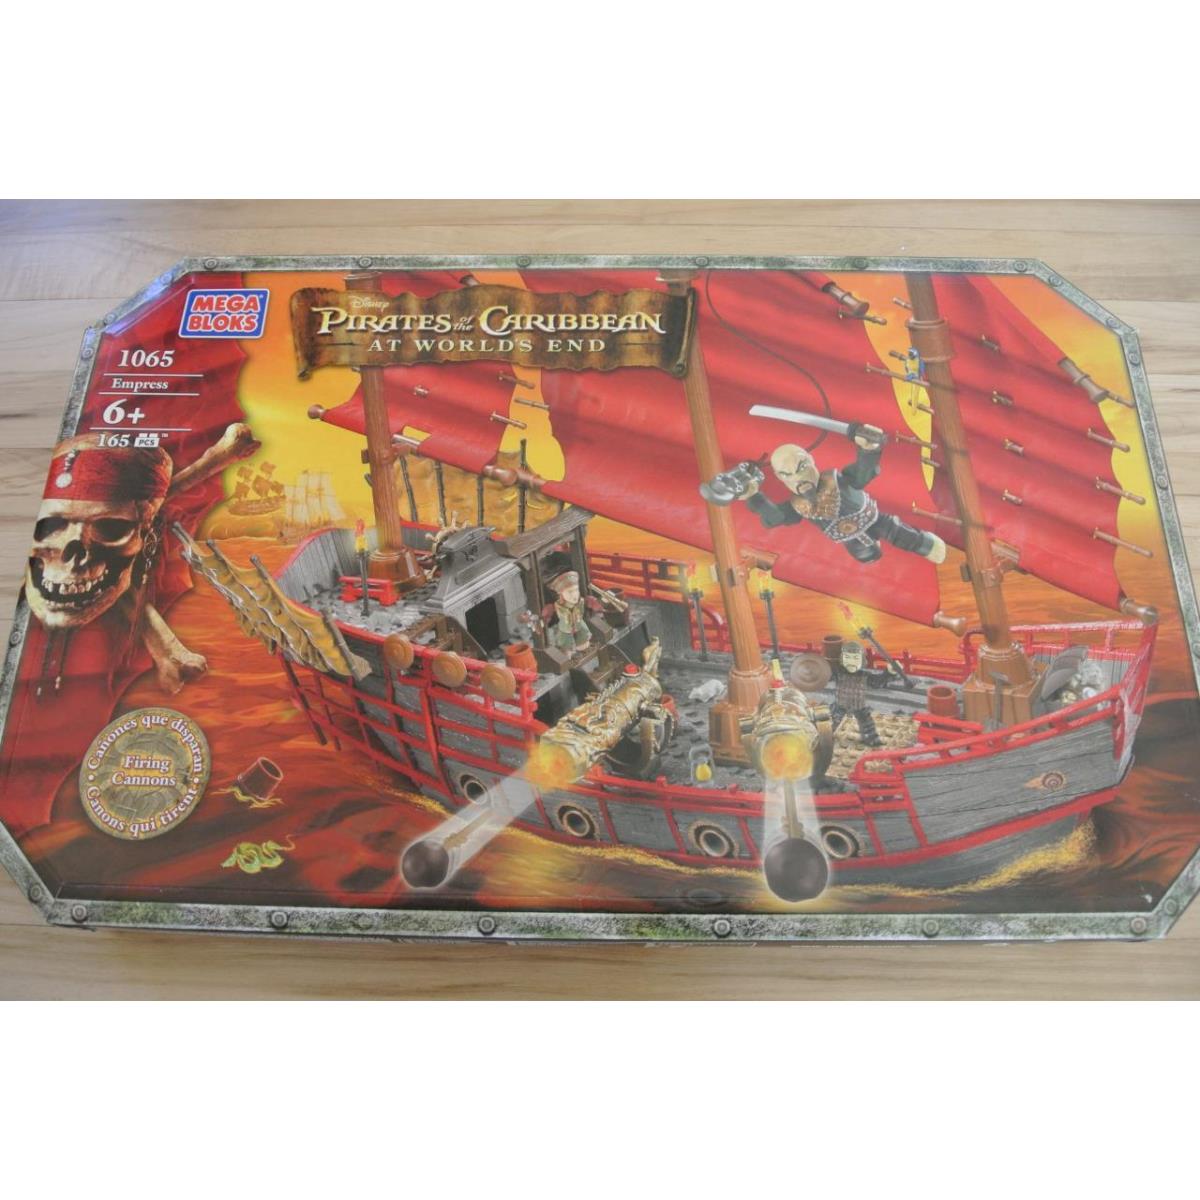 Mega Bloks 1065 Pirates of The Caribbean: At Worlds End - Empress Pirate Ship